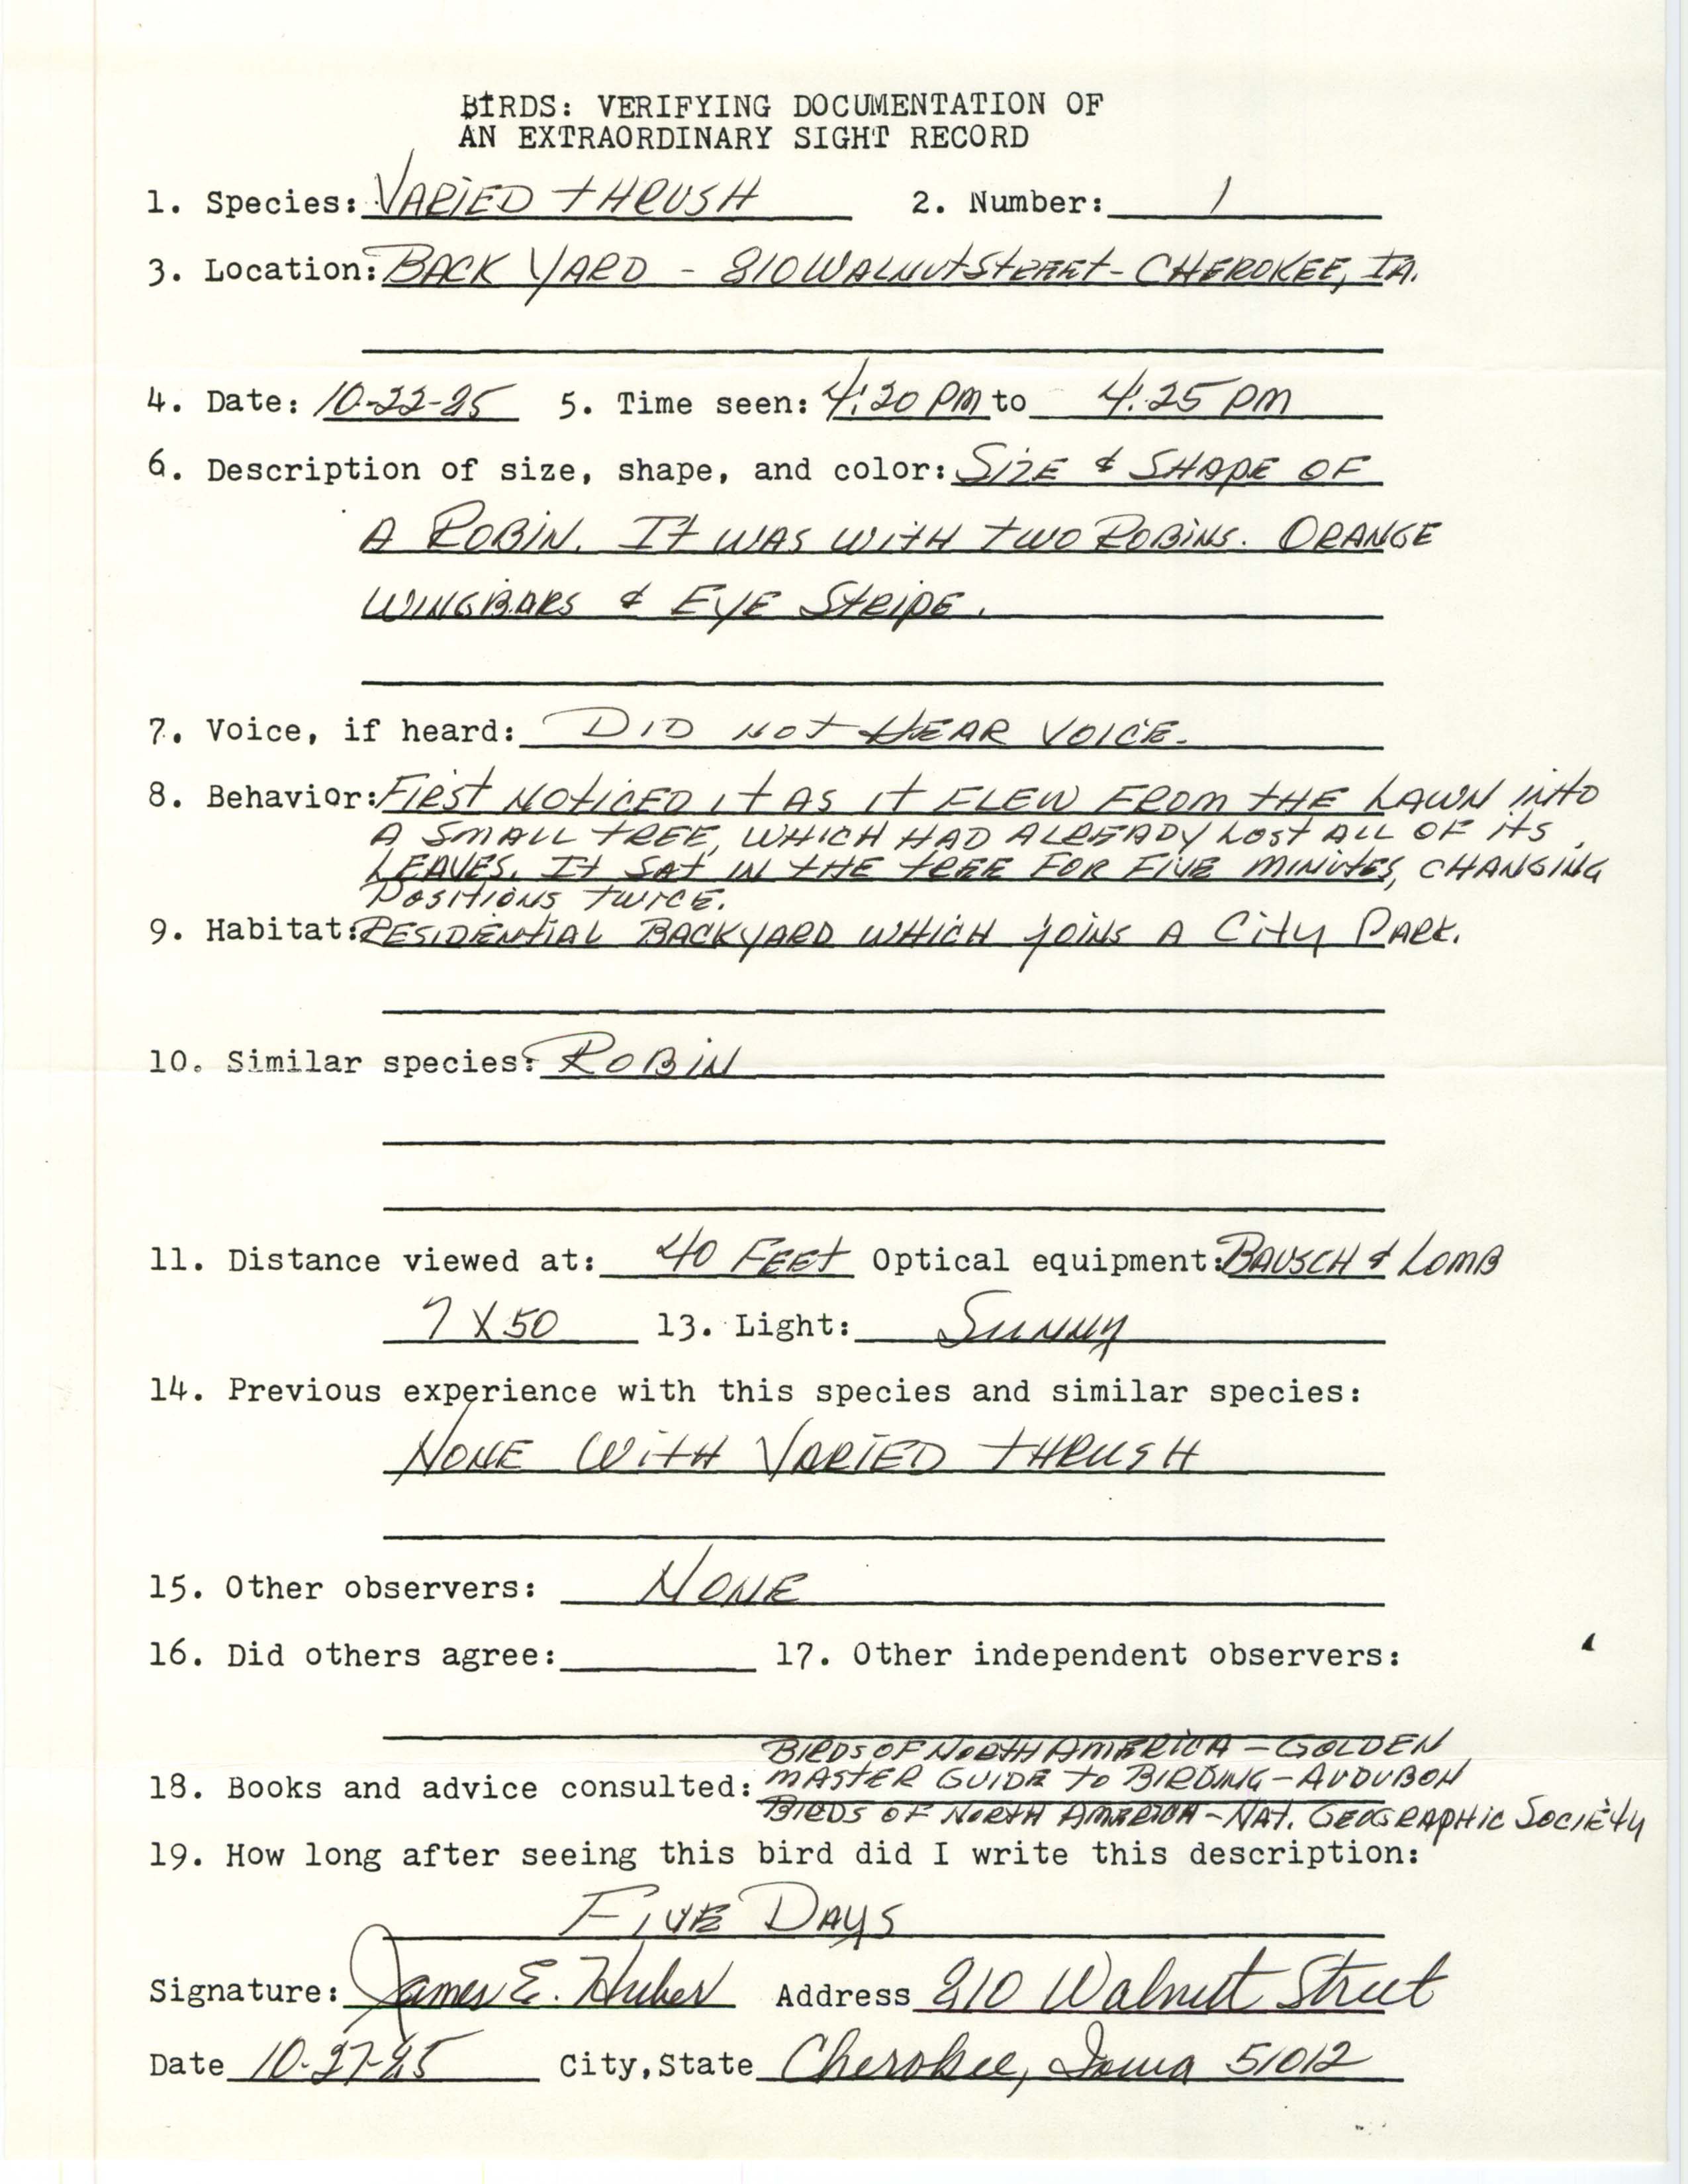 Rare bird documentation form for Varied Thrush at Cherokee, 1985